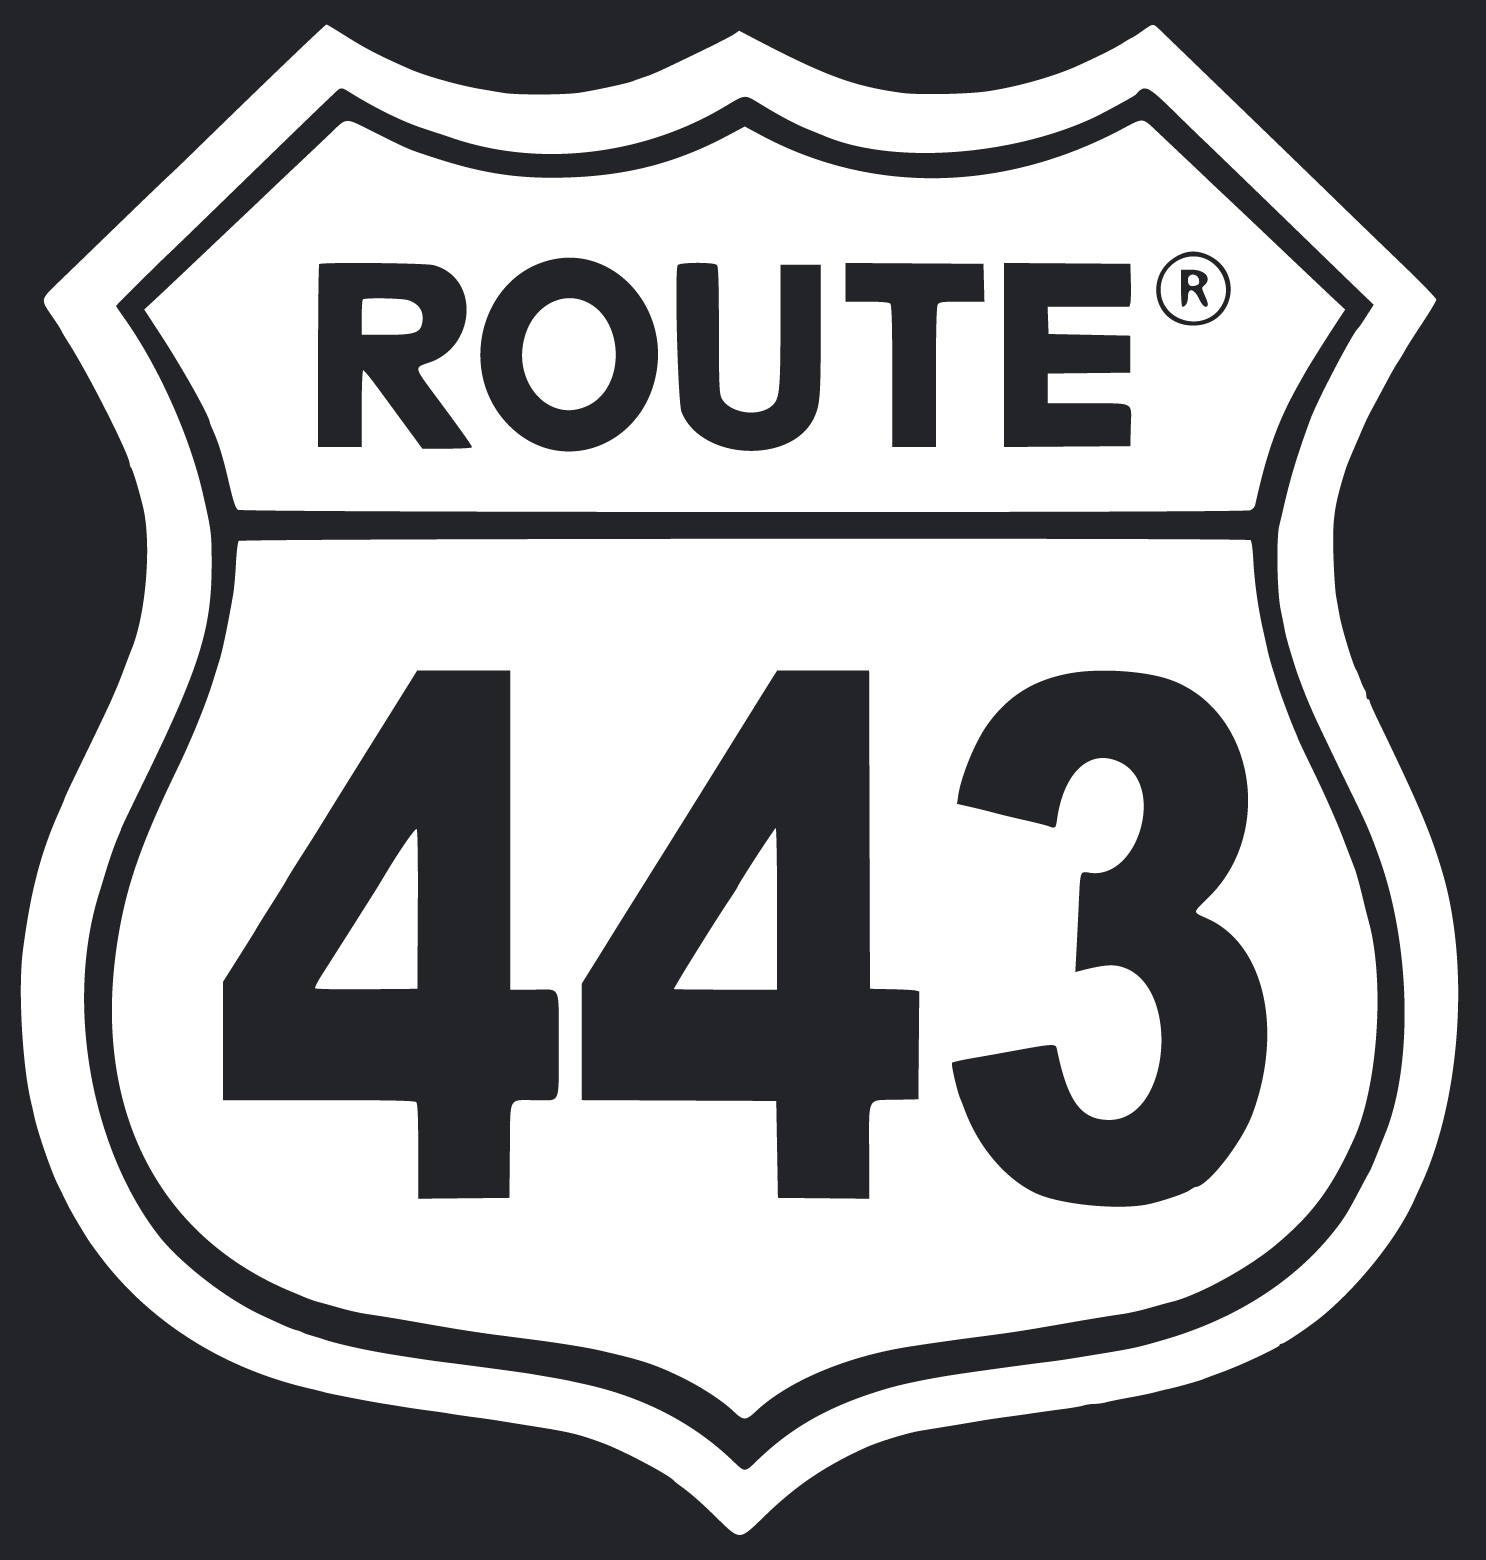 Route443.click